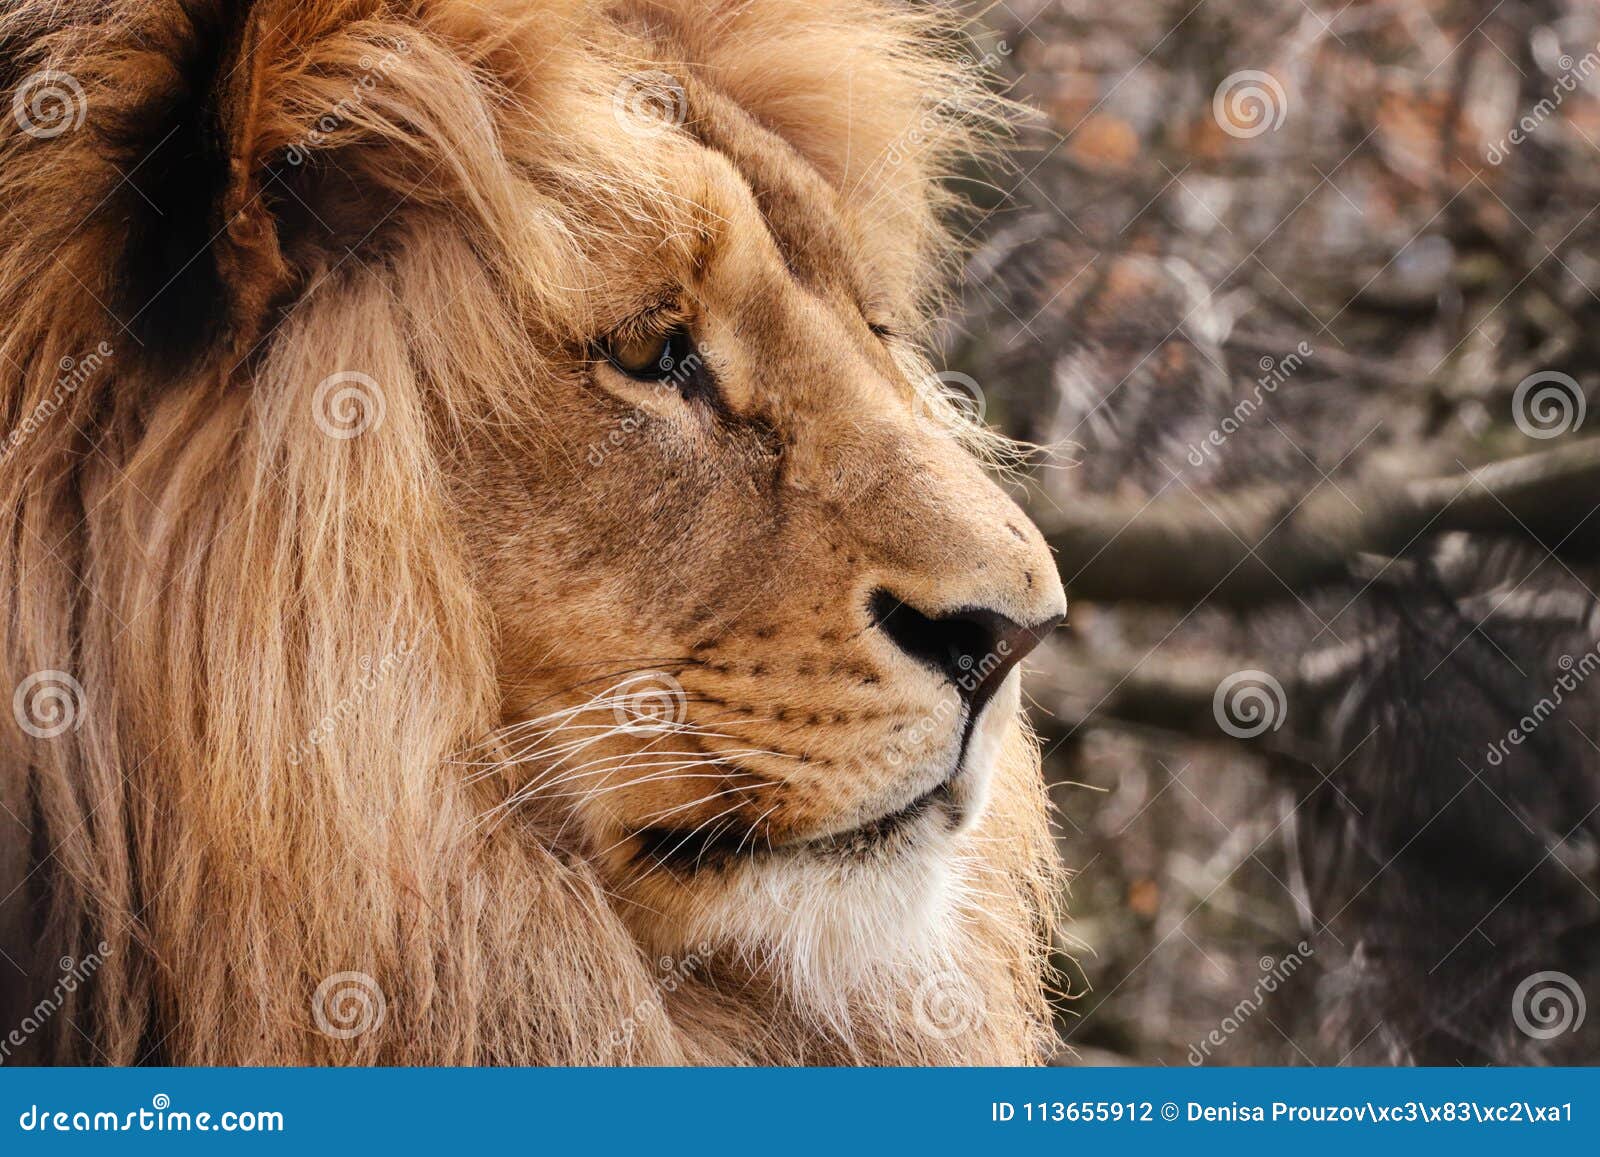 profil face lion in autunm colour